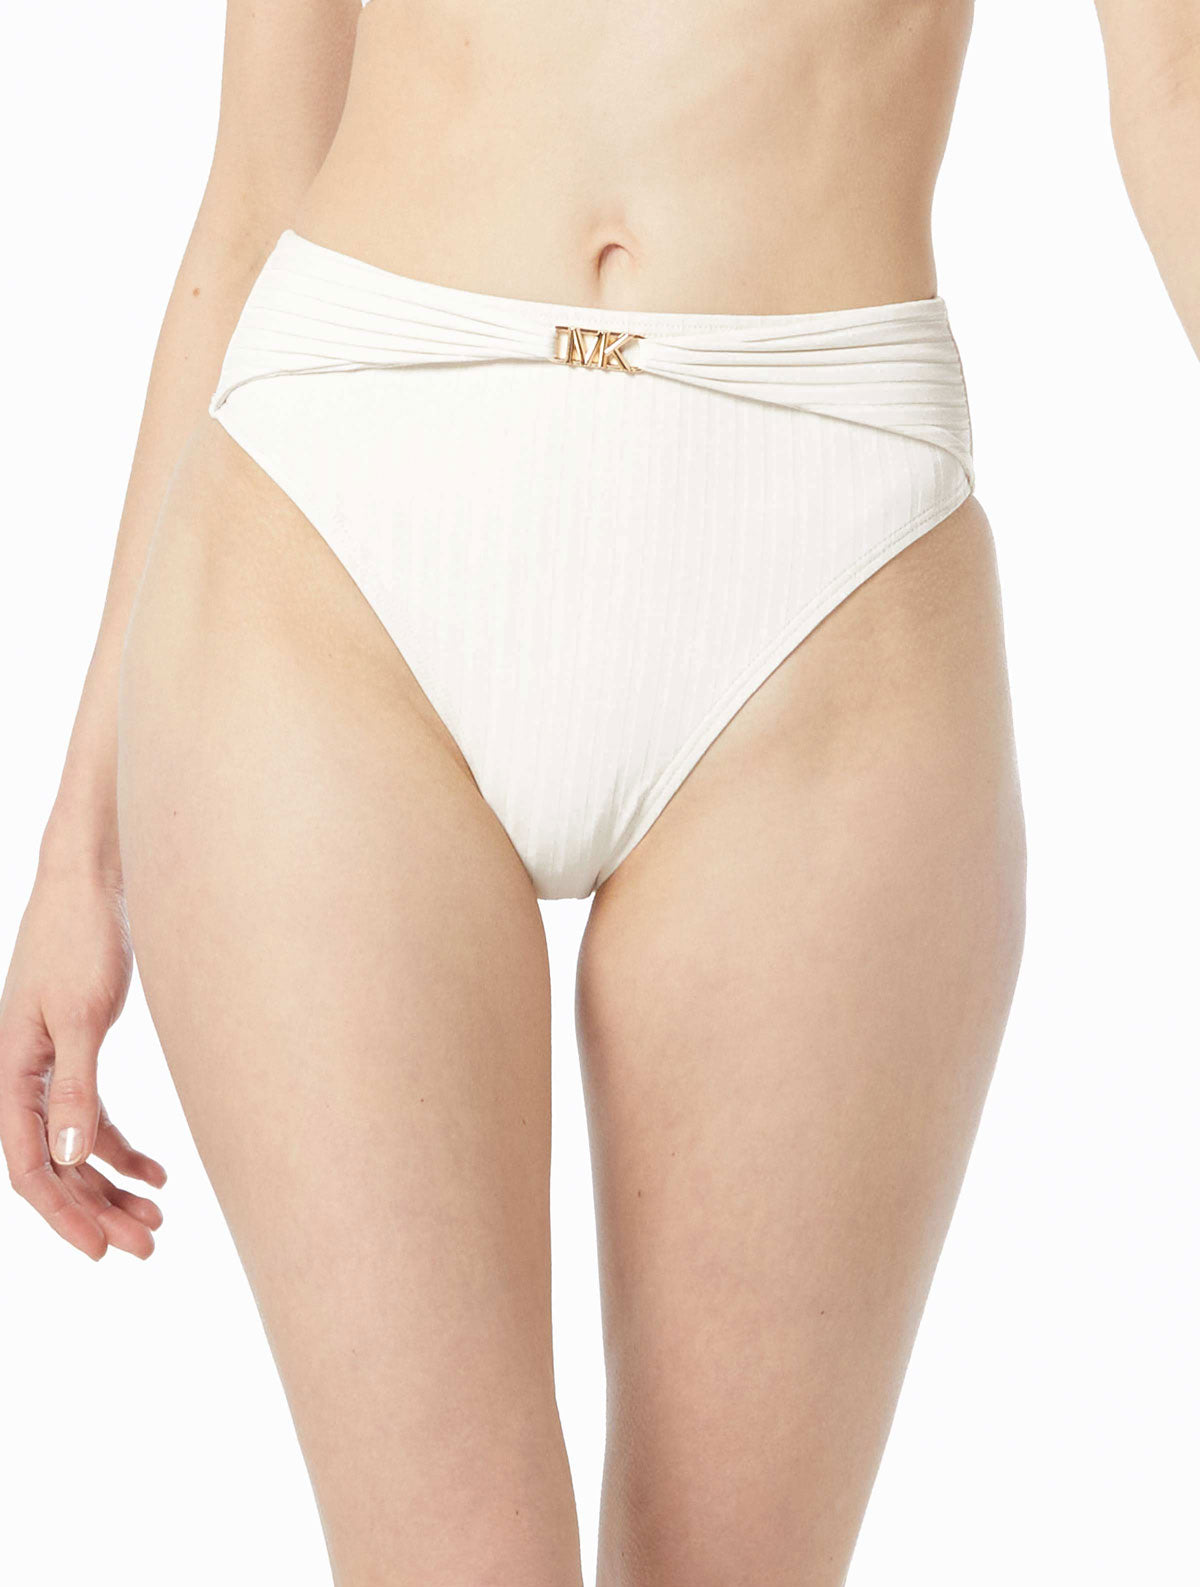 Michael Michael Kors: Solid Textured Ribbed High Leg Bikini Bottom - BONE